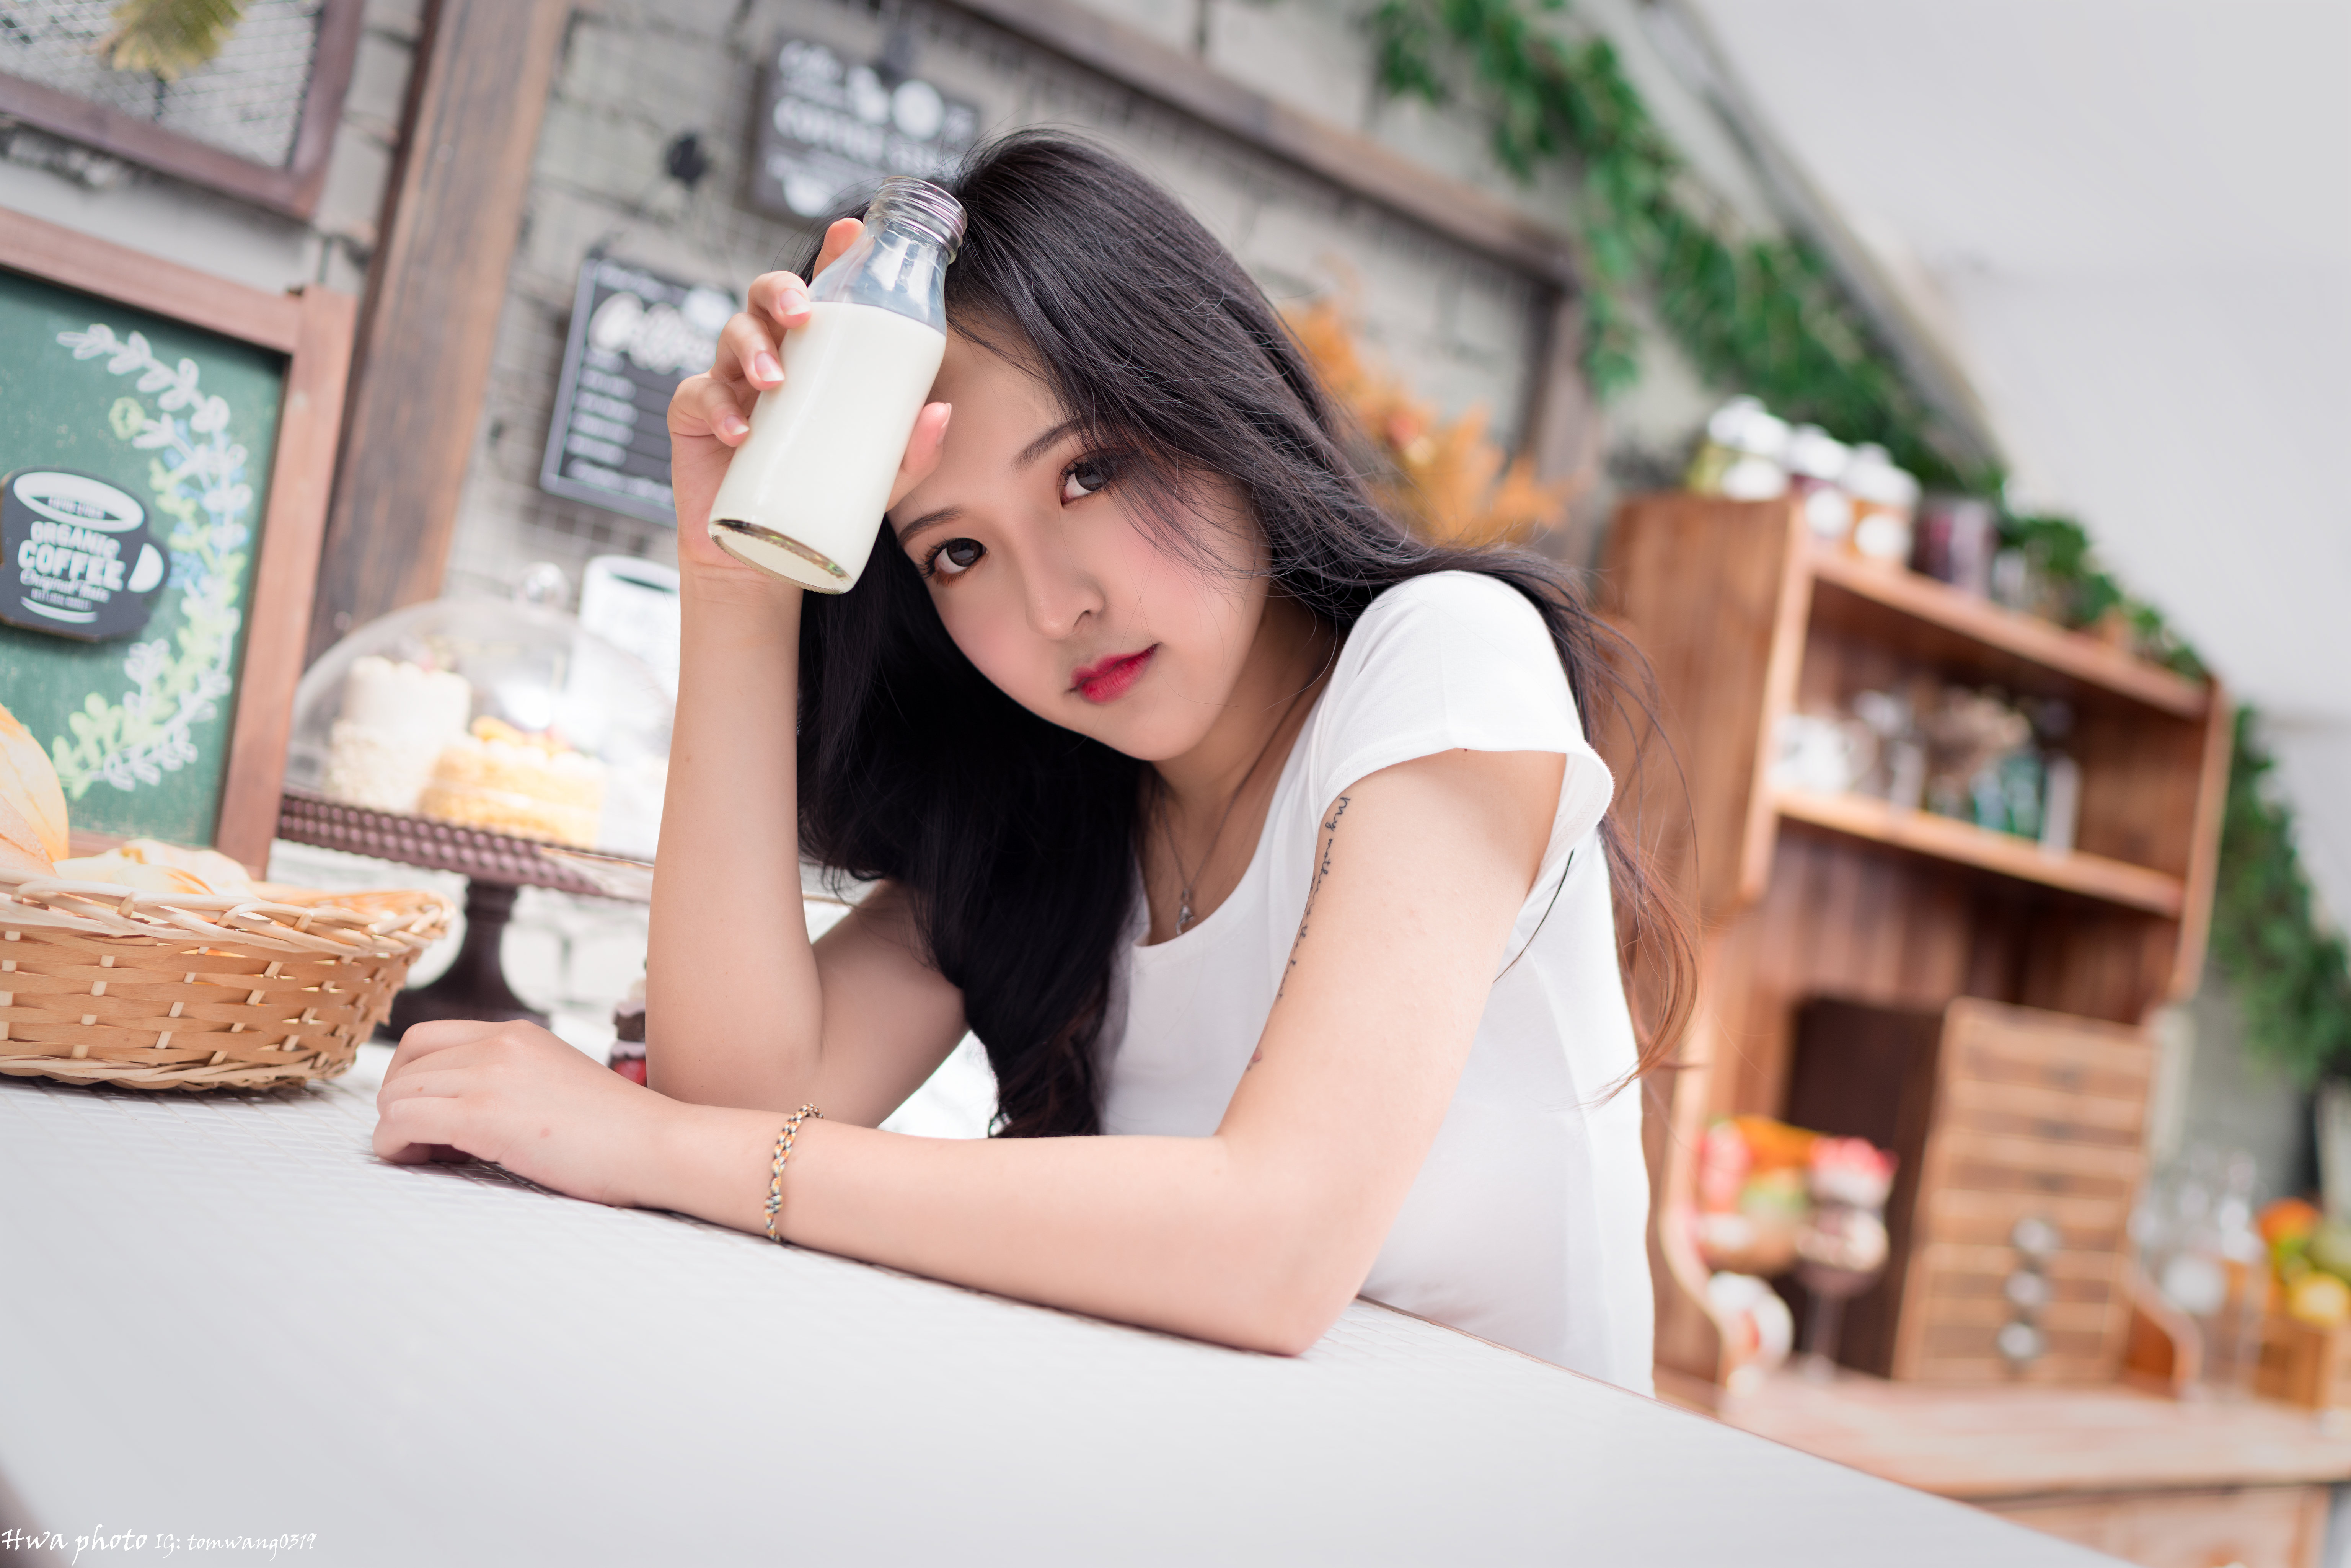 Asian Model Women Long Hair Brunette Sitting Milk T Shirt Table Cupboard Bracelets Cake Signs 6144x4098